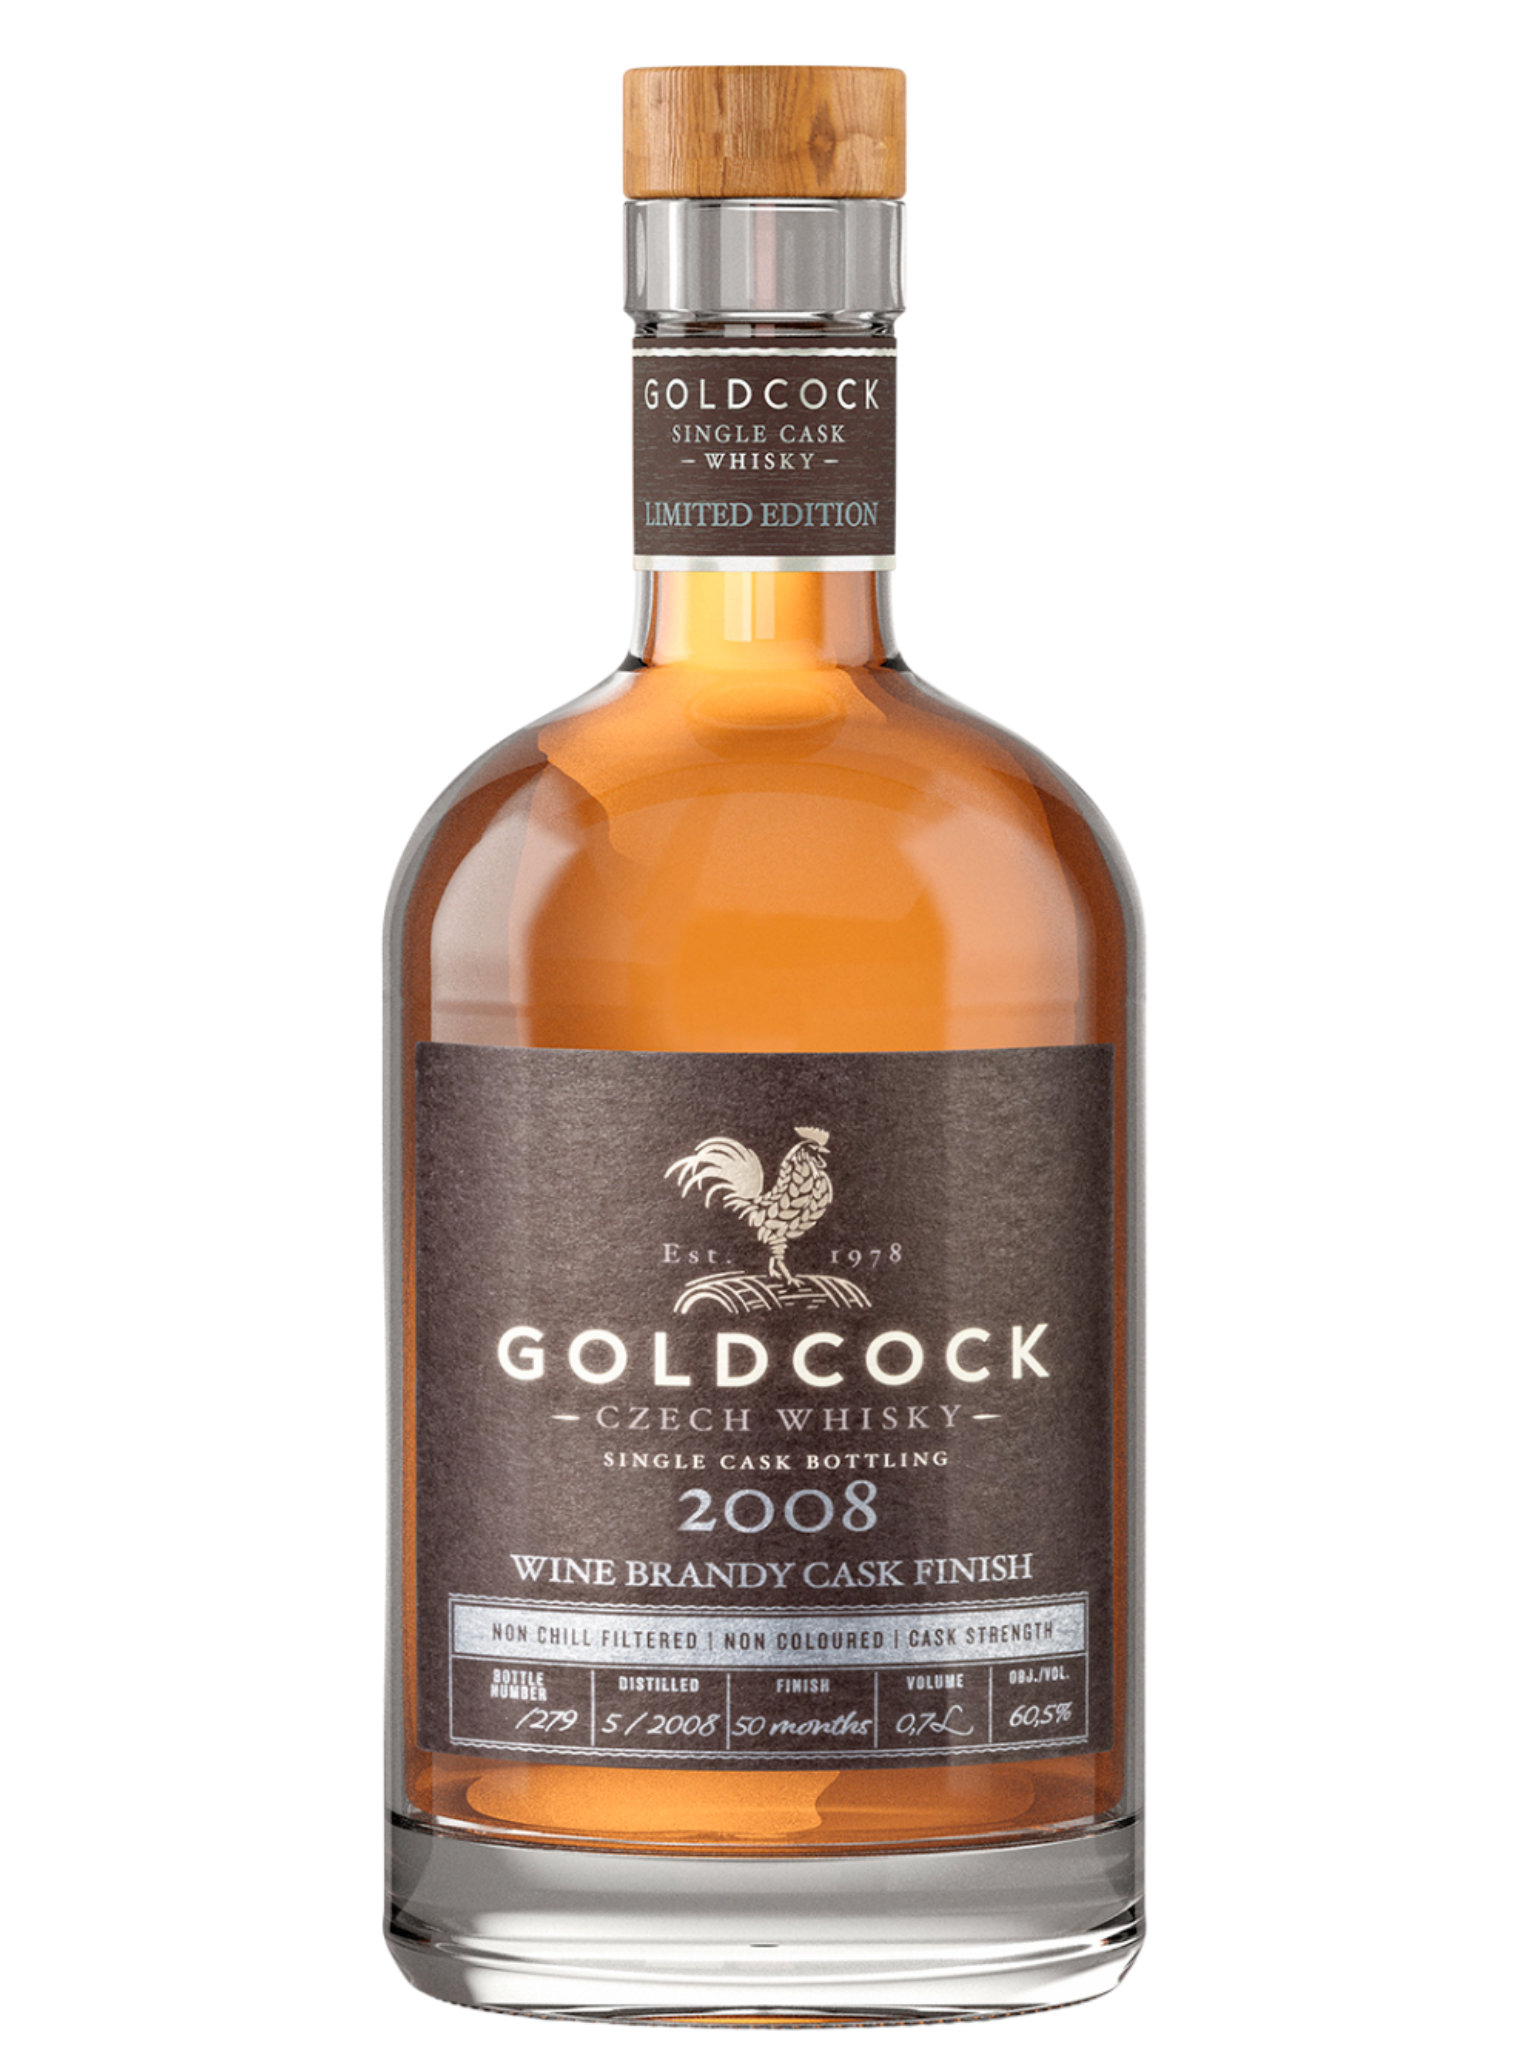 GOLDCOCK Whisky GOLDCOCK 2008 Wine Brandy Cask Finish 60,5% 0,7l